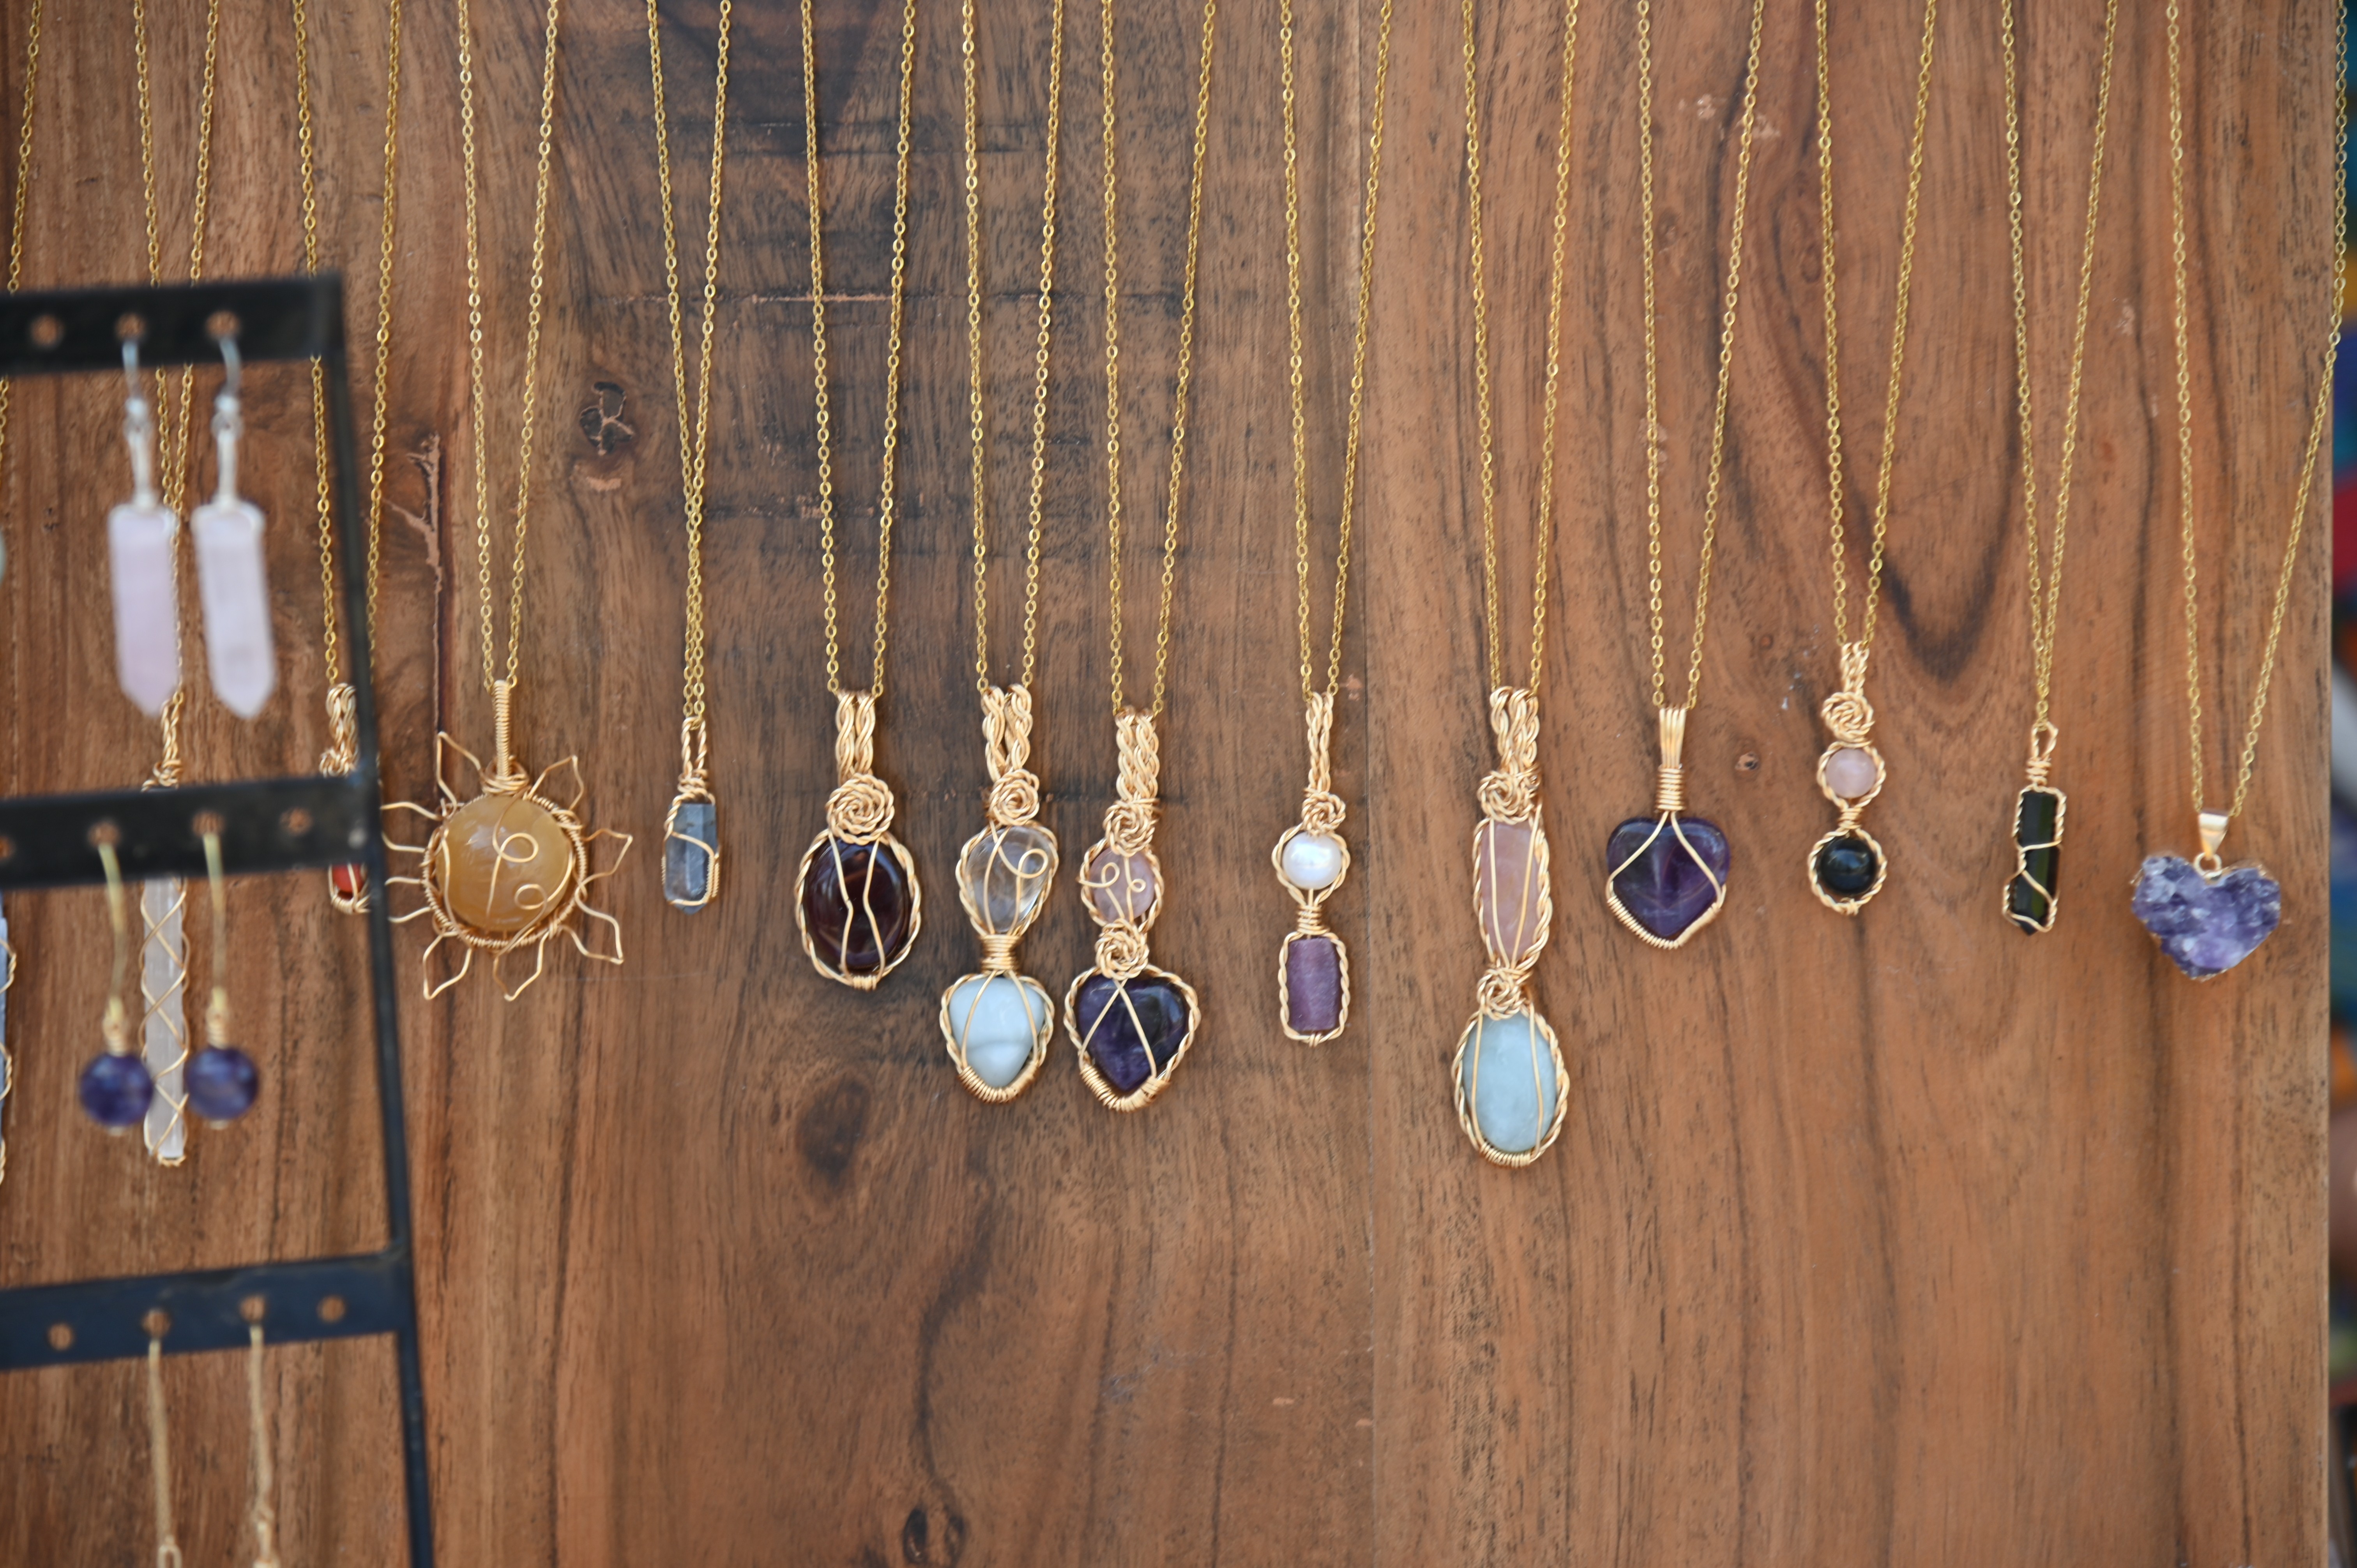 Beautiful pendants made of stones